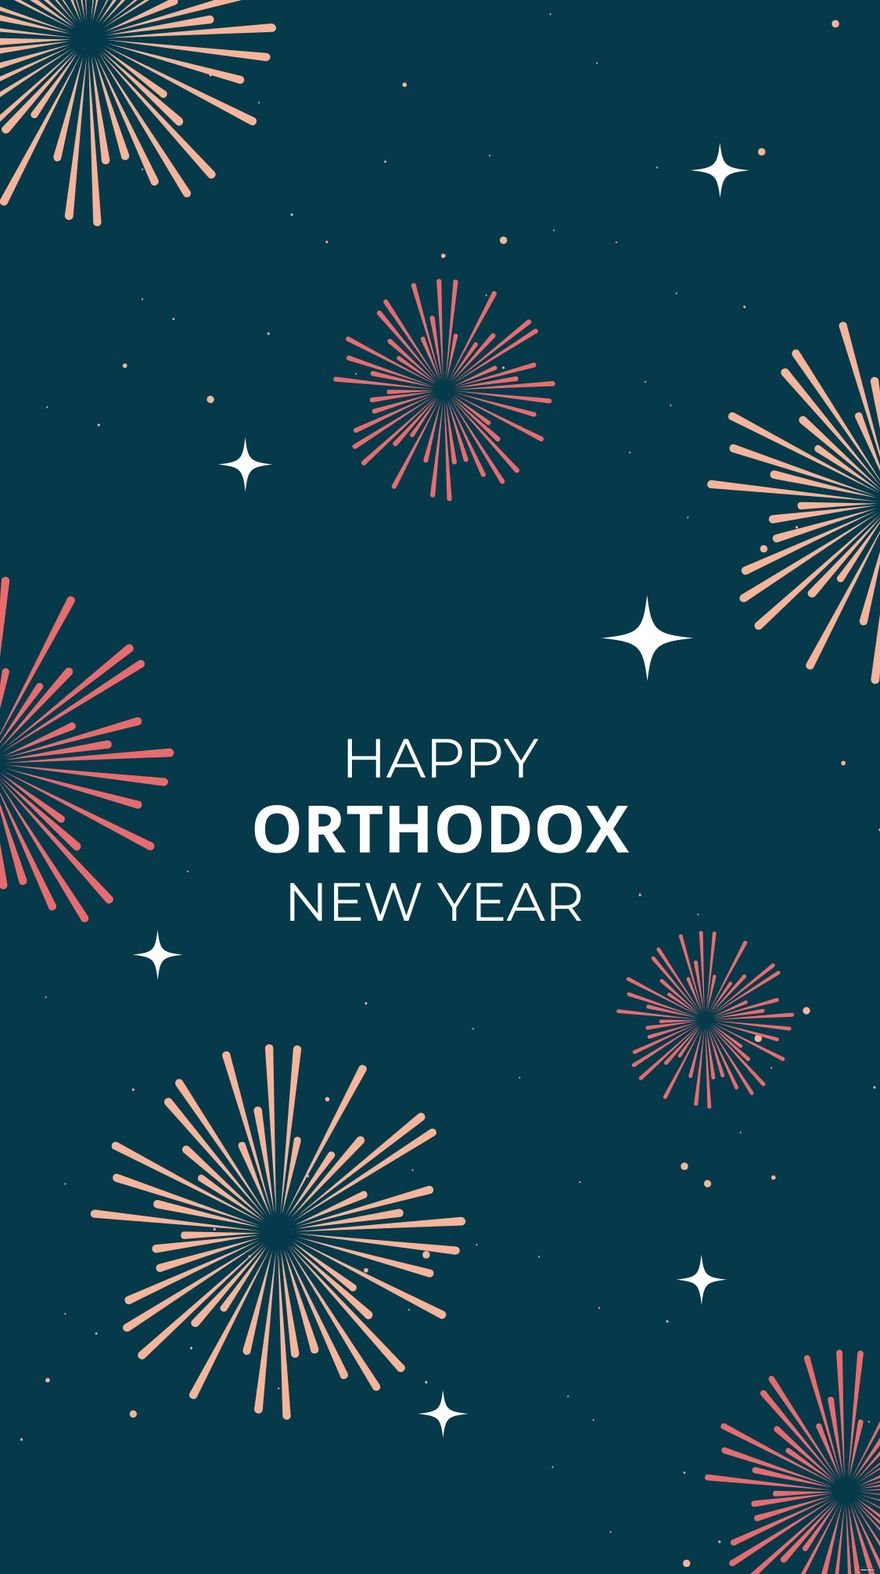 Orthodox New Year iPhone Background